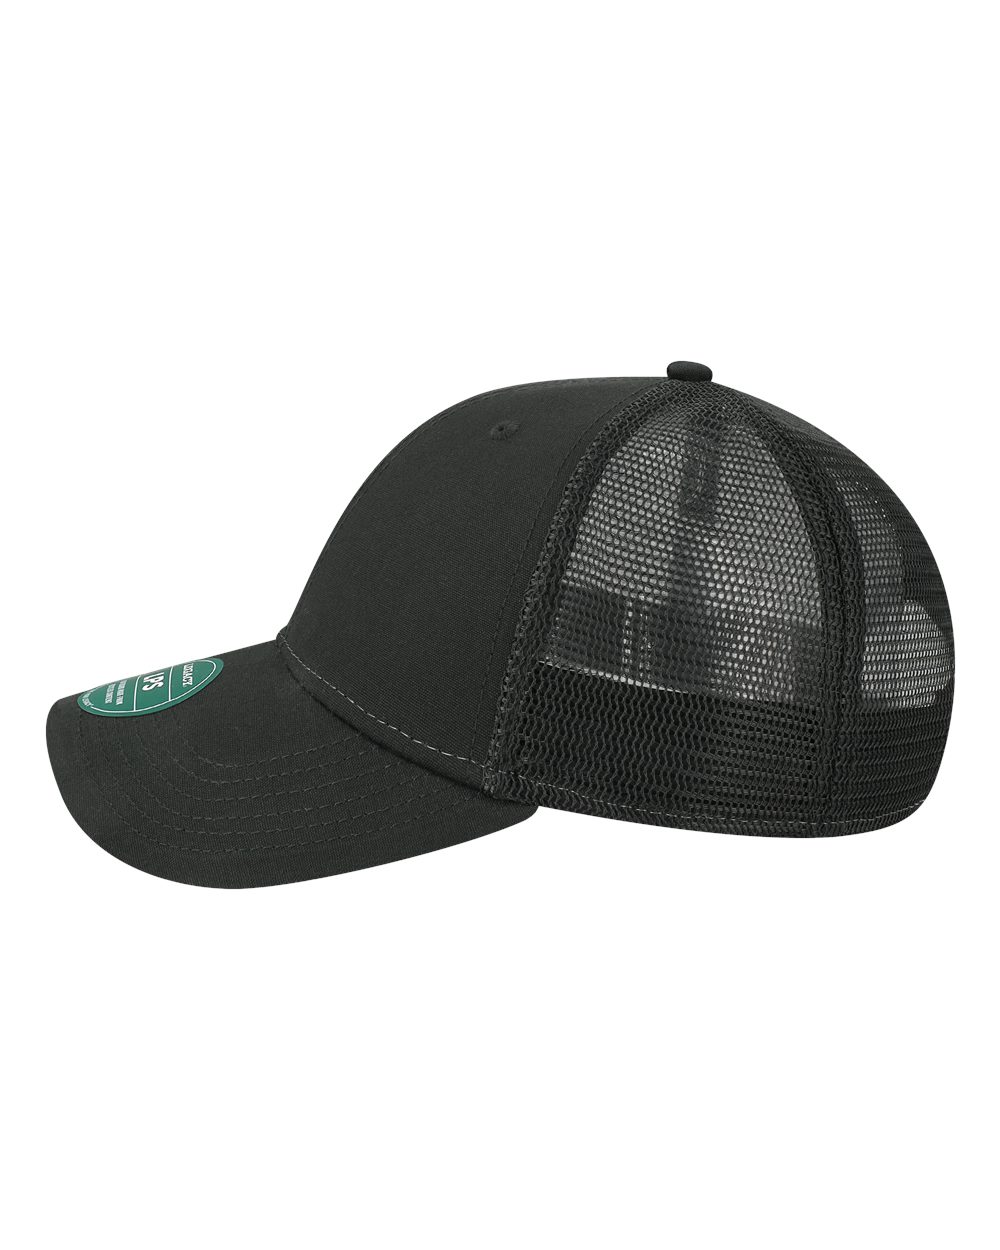 Penn Navy Lo-Pro Snapback Adjustable Trucker Hat – L2 Brands